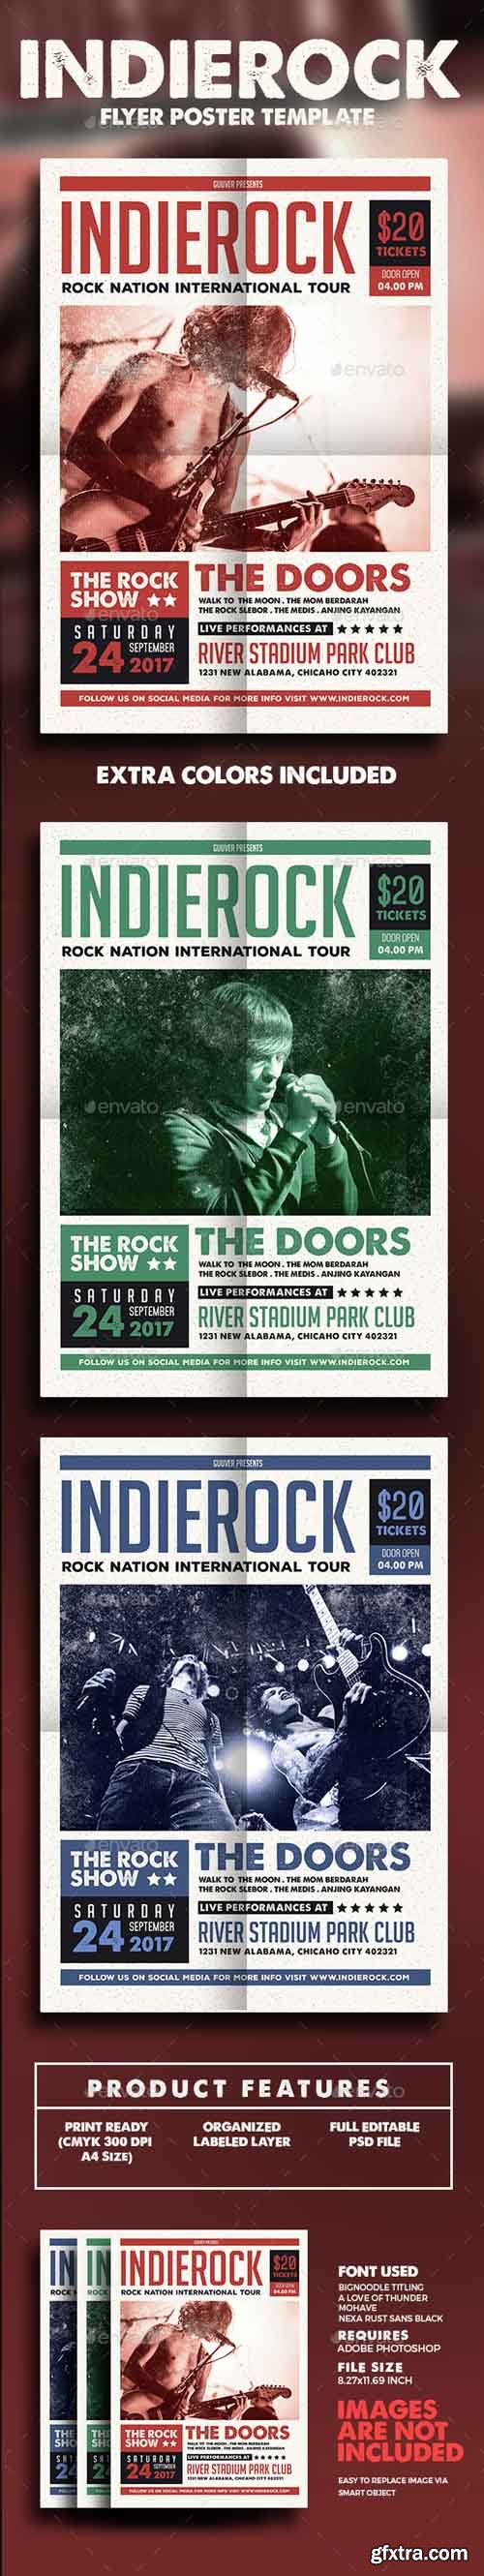 GR - Indie Rock Flyer/Poster 14635588